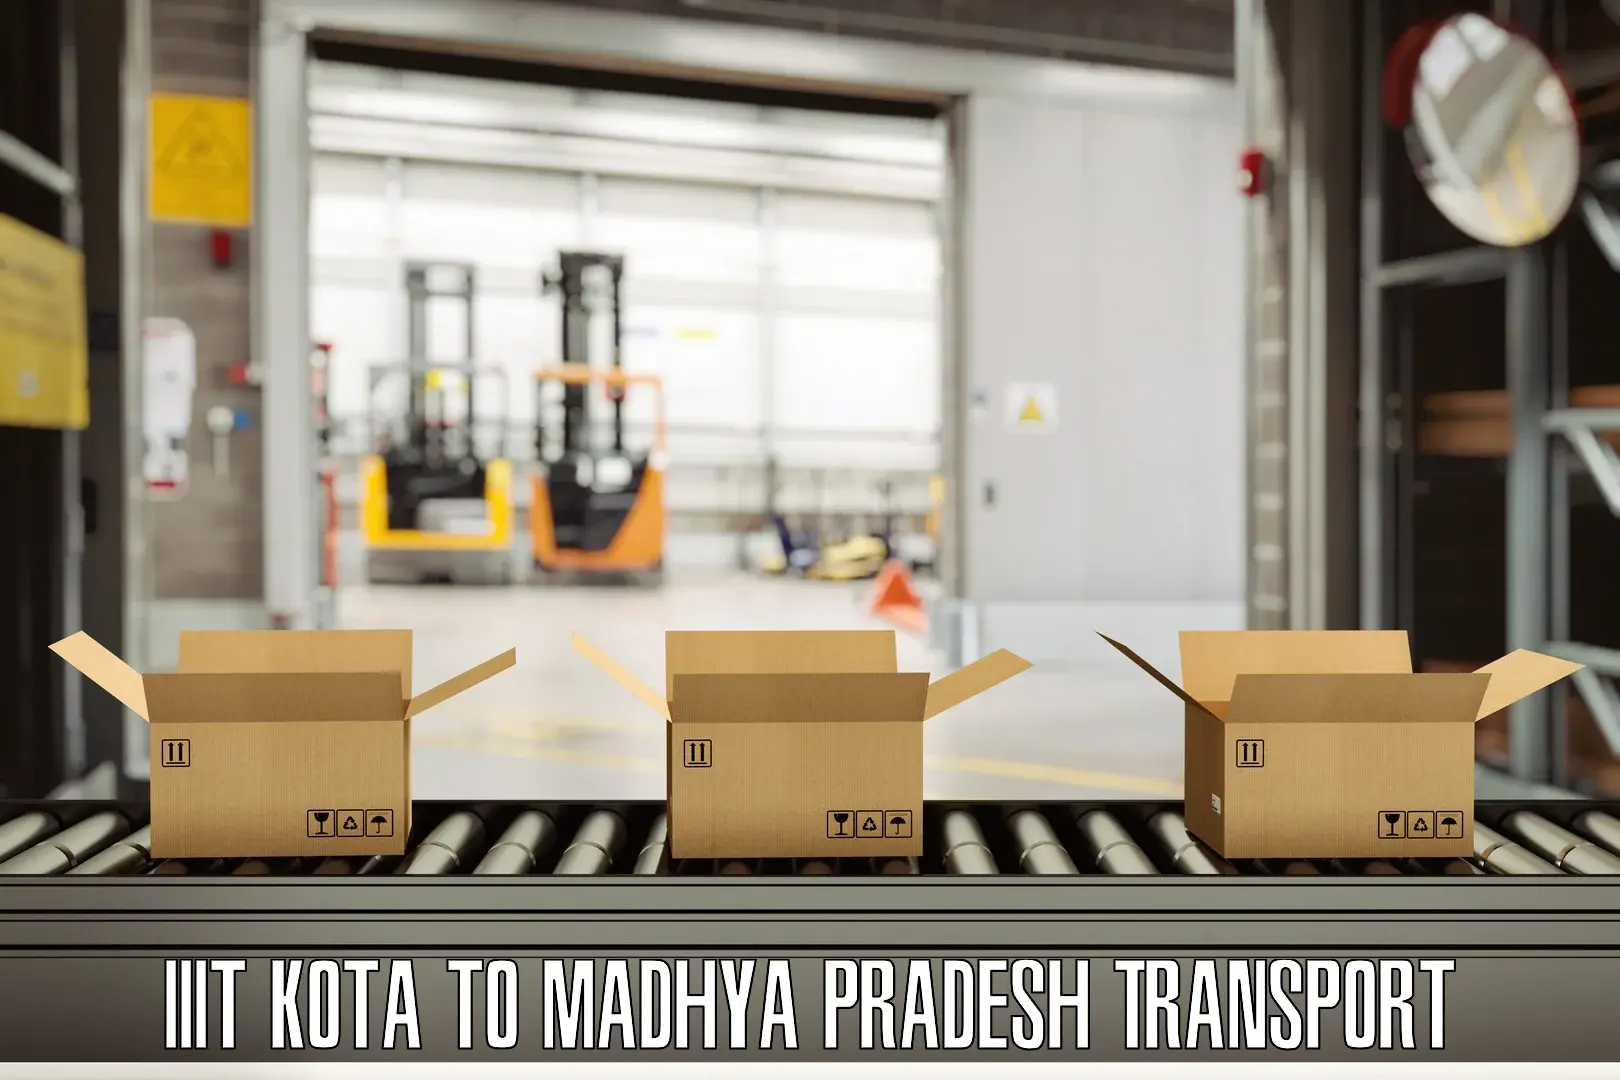 Transport in sharing IIIT Kota to Begumganj